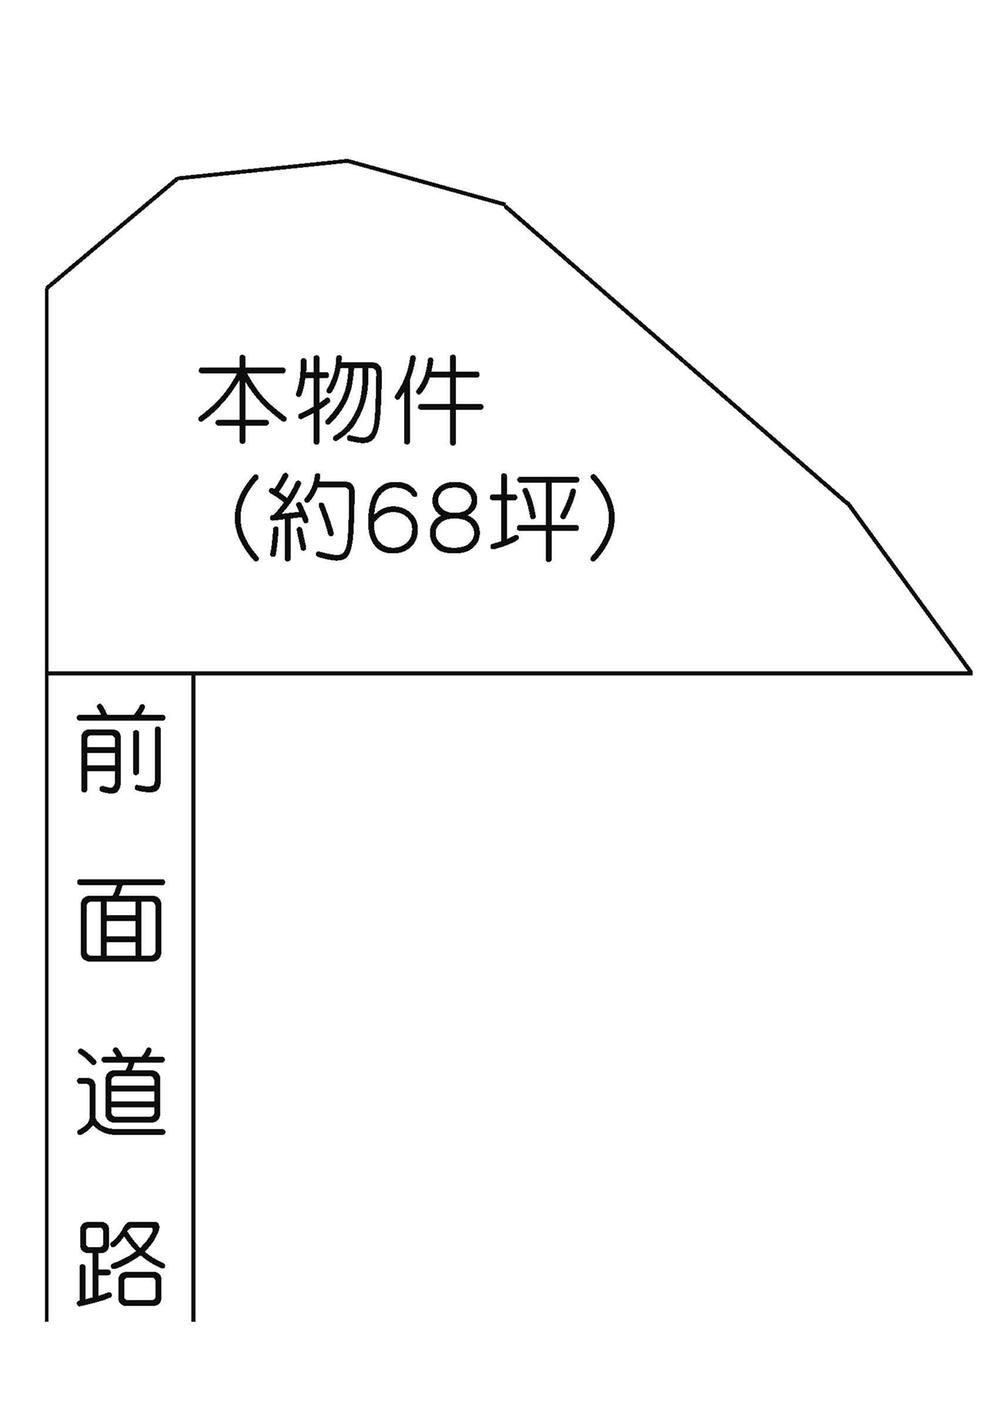 Compartment figure. Land price 5 million yen, Land area 226.73 sq m